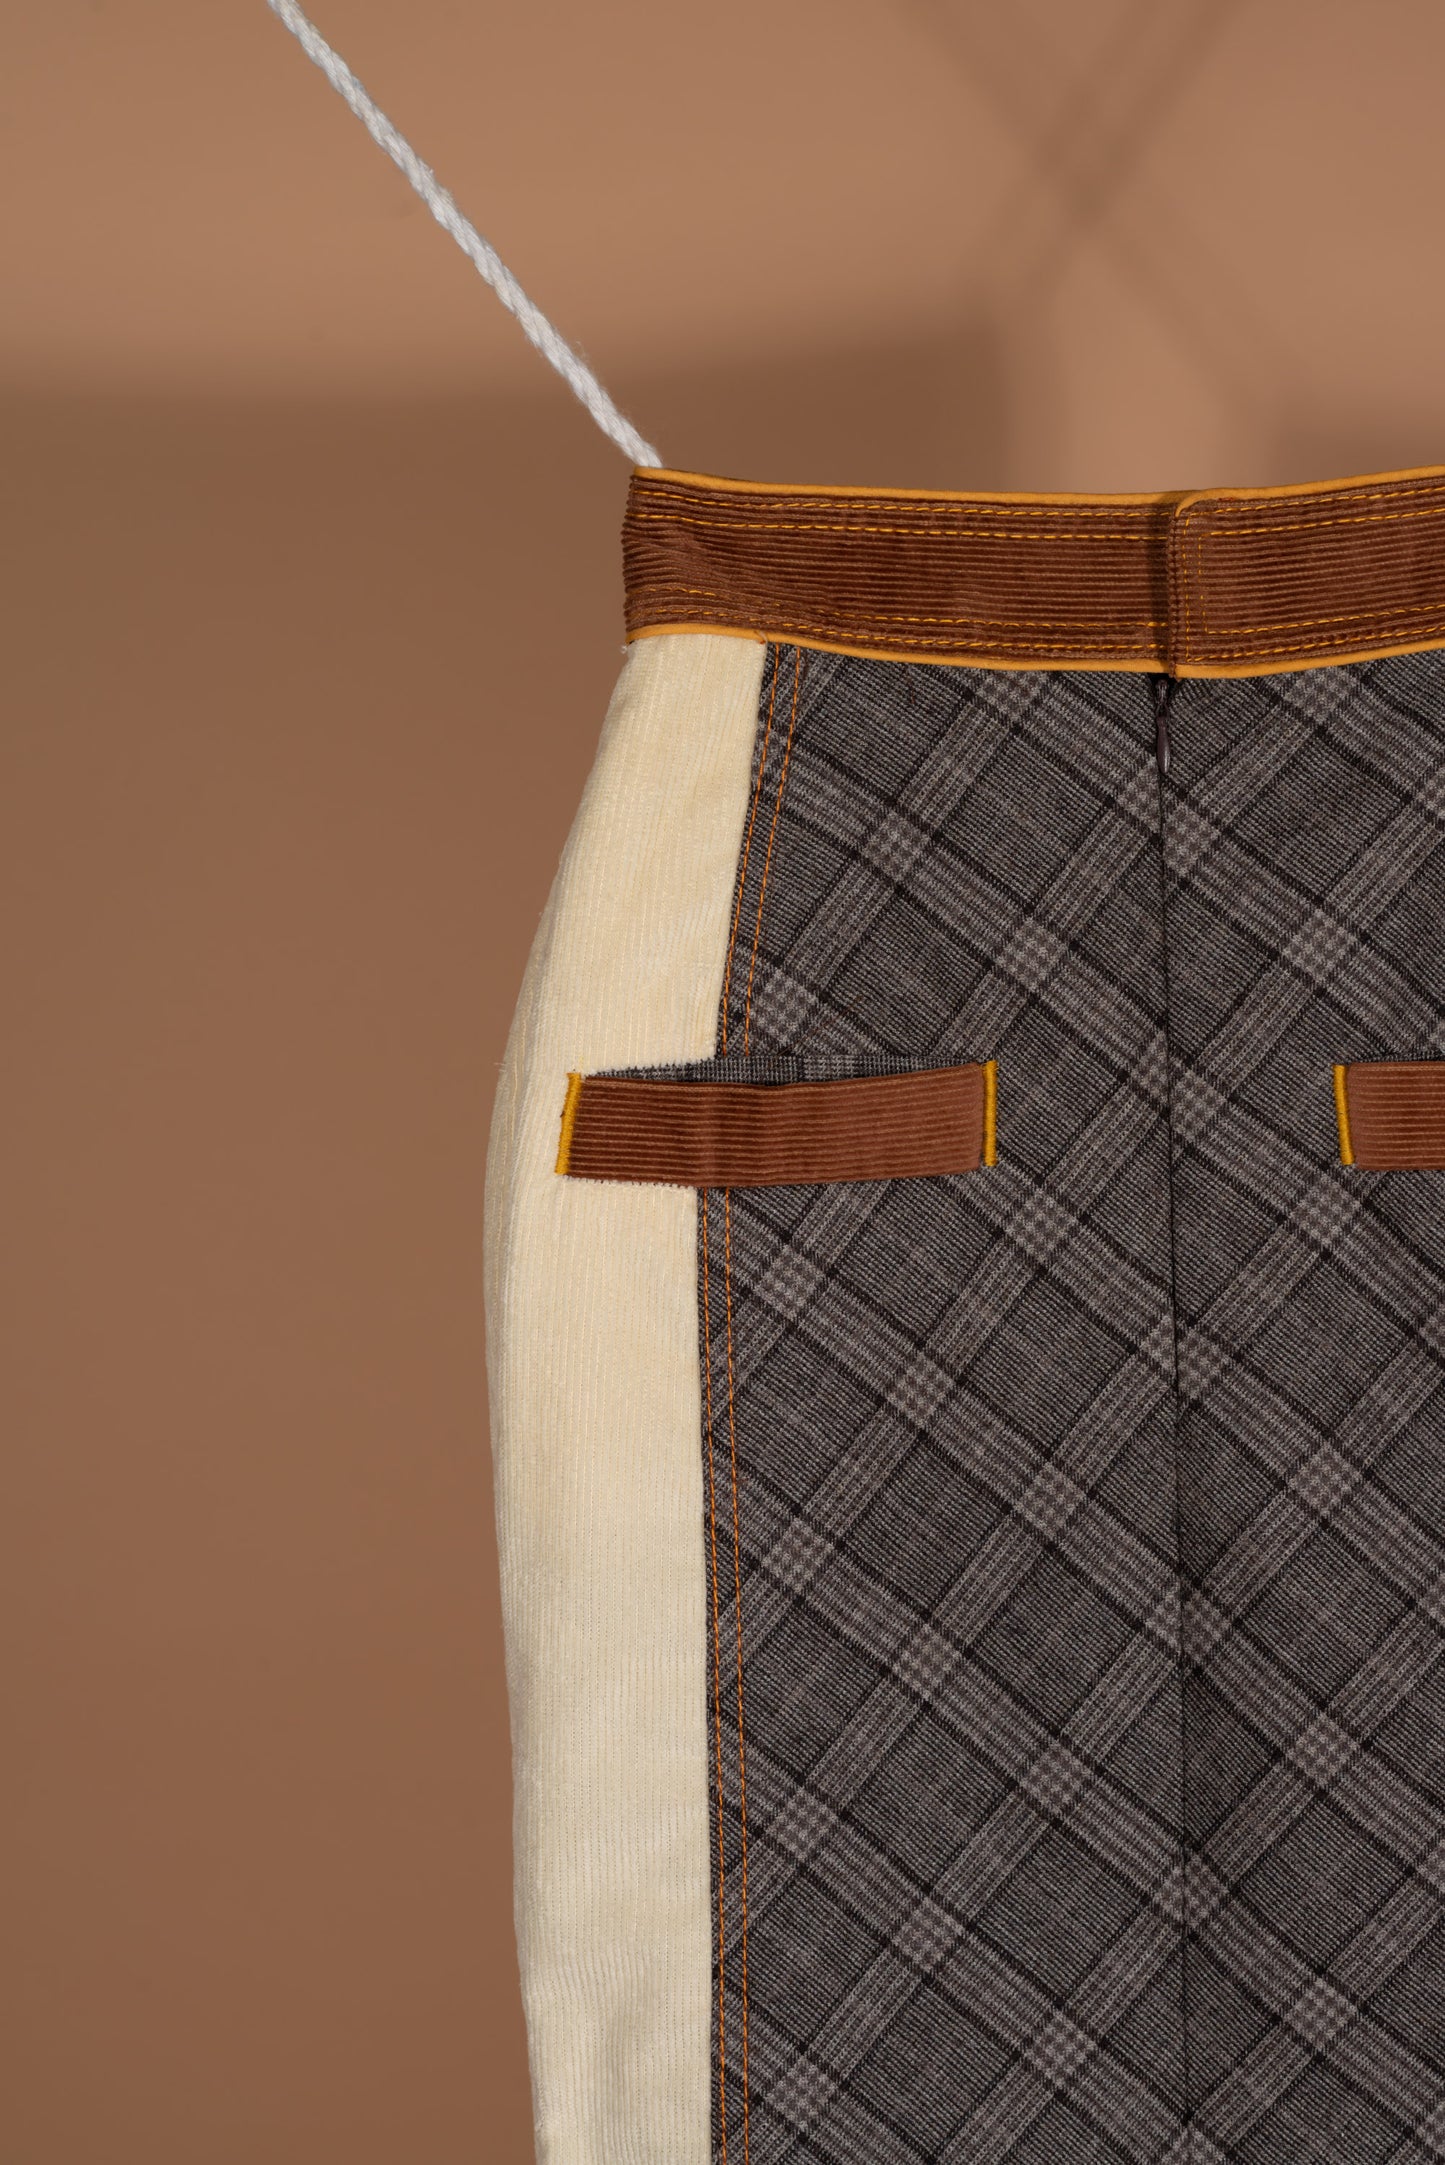 Suspender Skirt (cream choco)